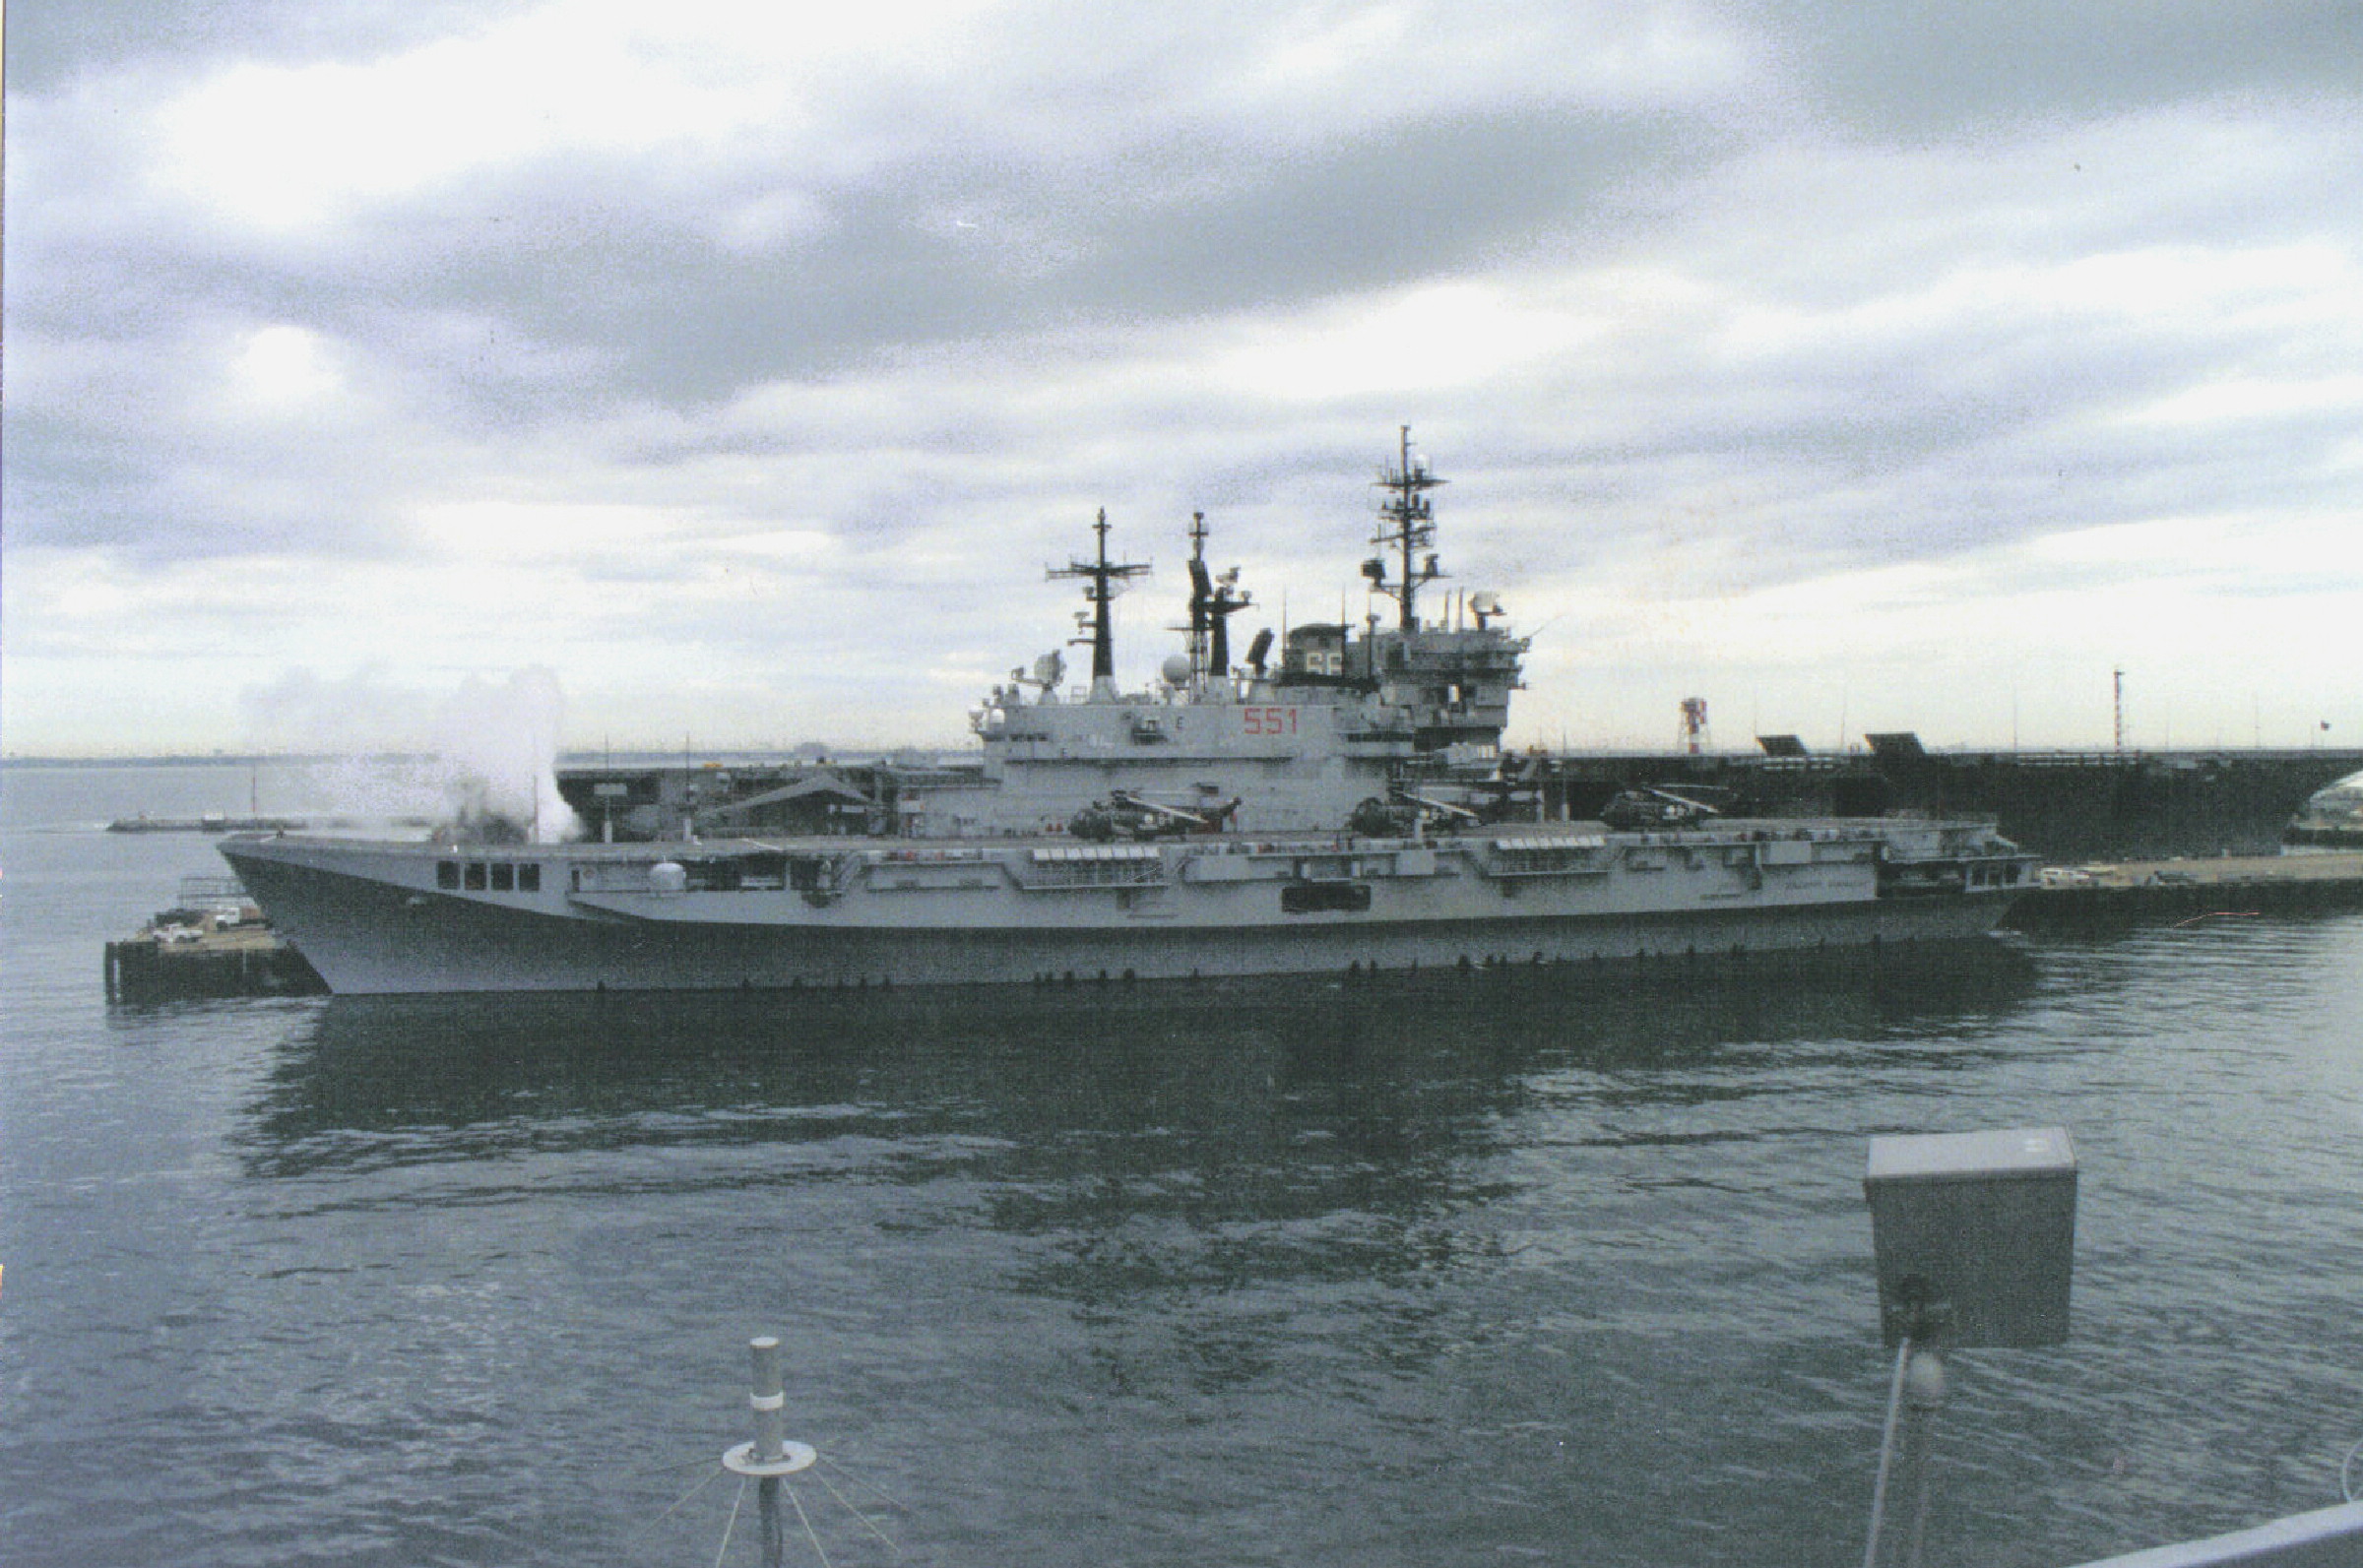 Italian Light Carrier Giuseppe Garibaldi with USS America in background, NOB, 1995 CVN-65.jpg